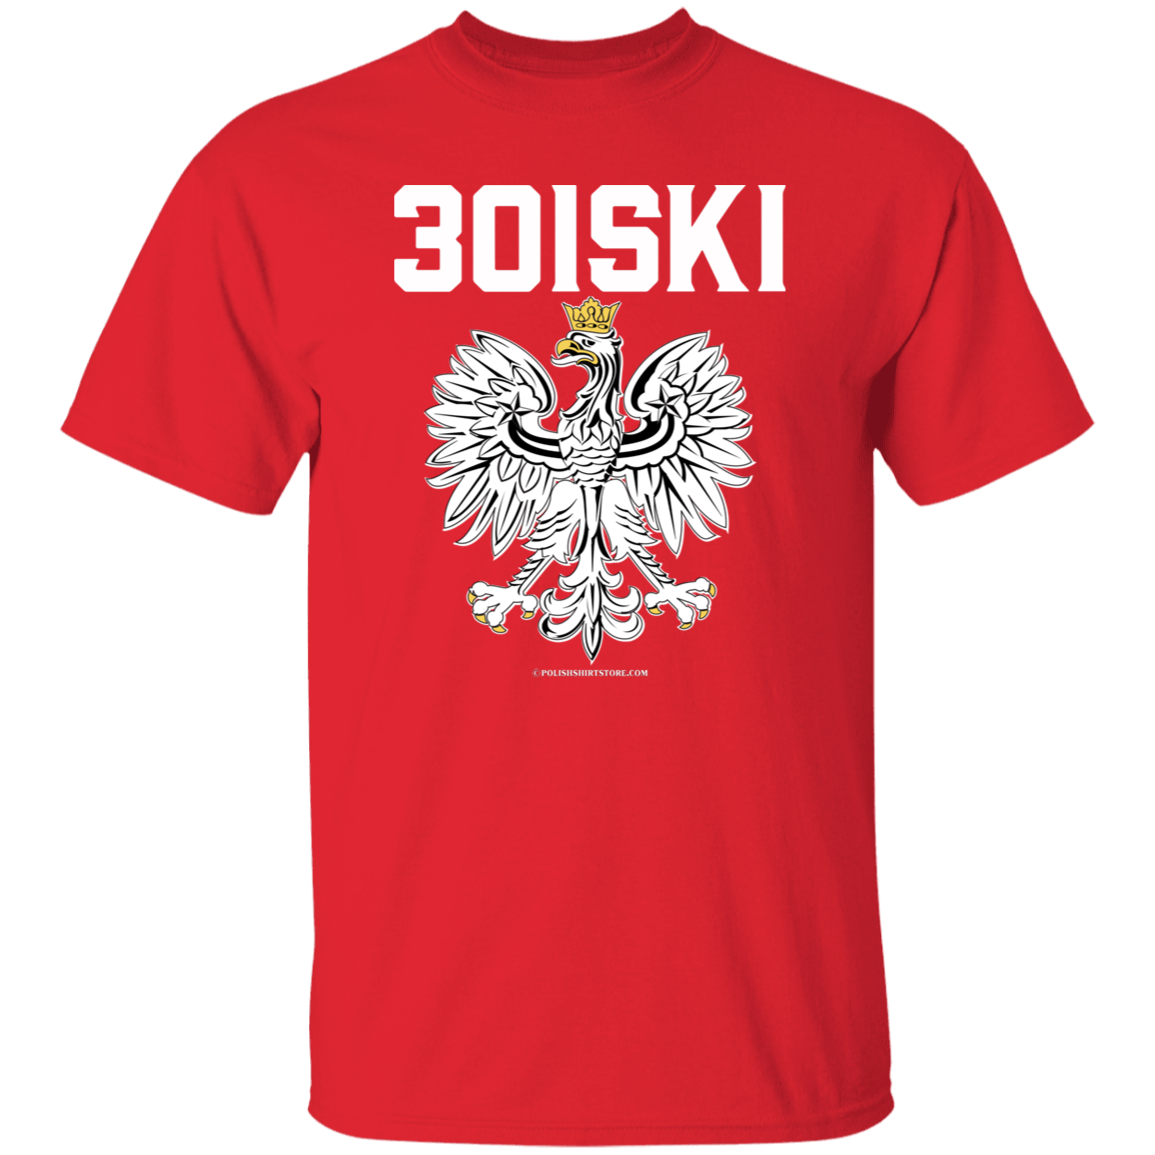 301SKI Apparel CustomCat G500 5.3 oz. T-Shirt Red S